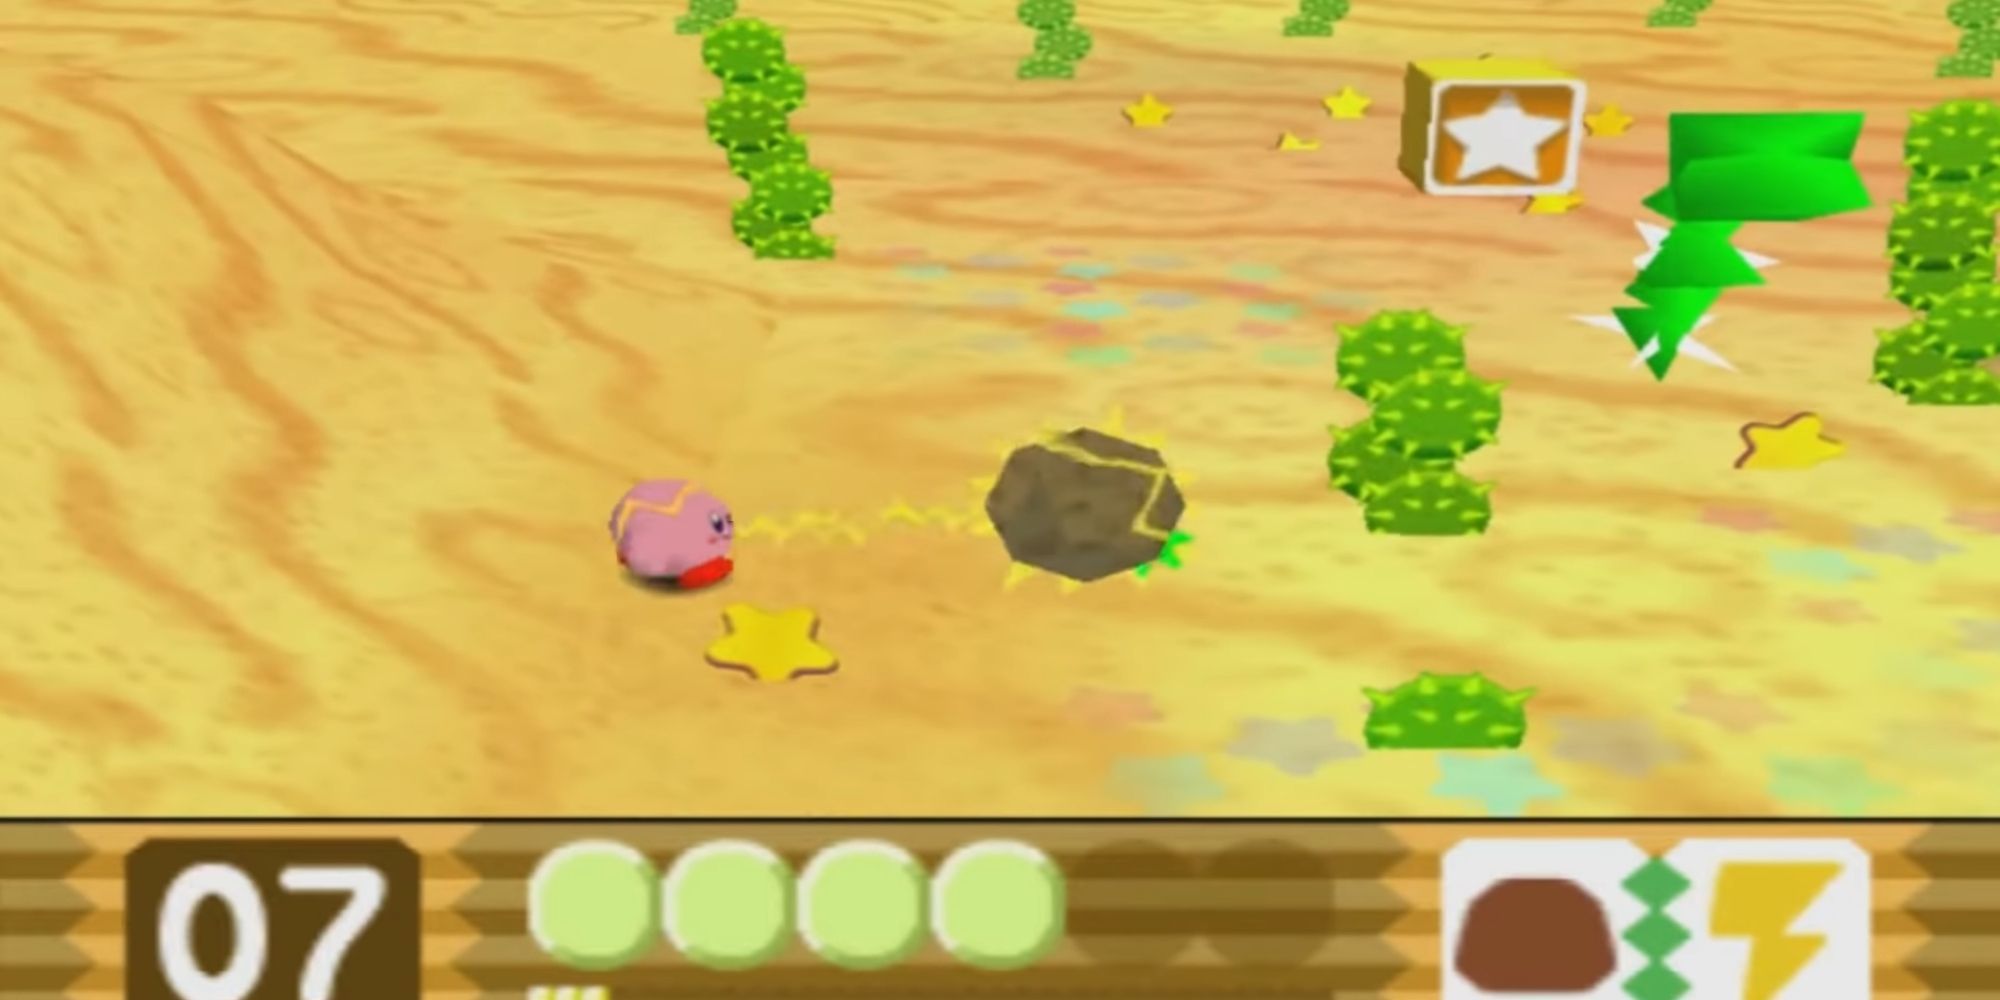 Kirby walks around the desert with his Rock yo-yo